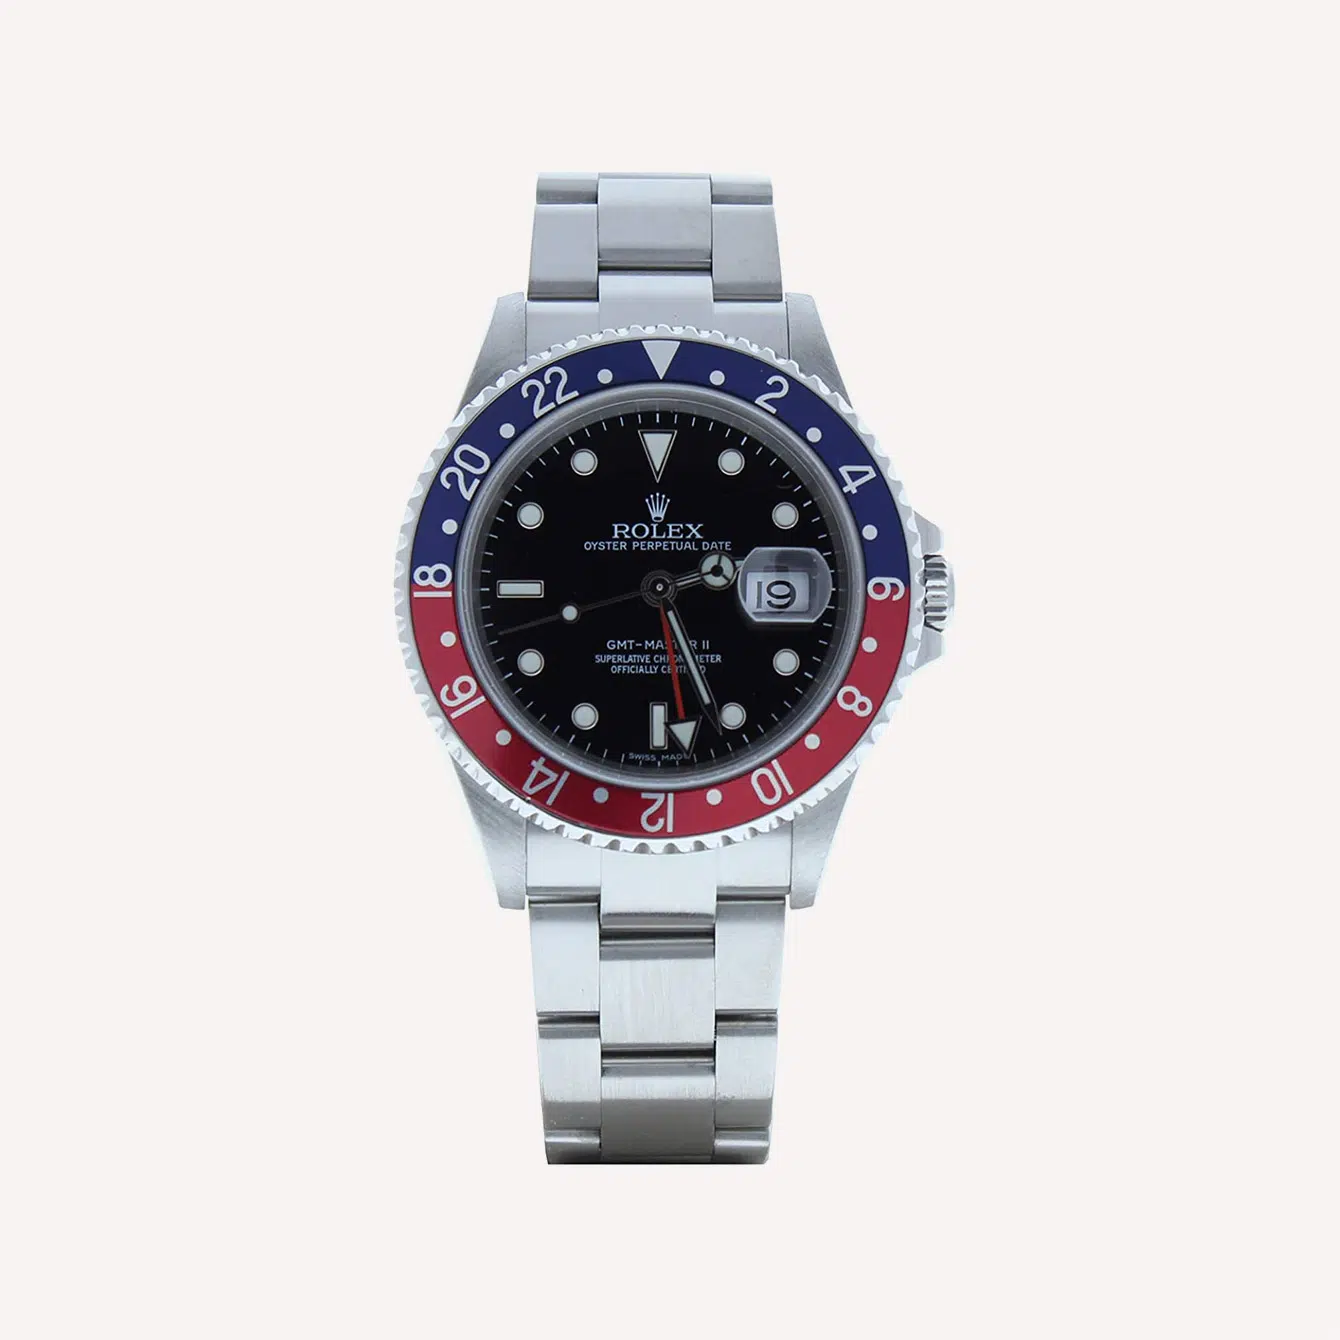 Rolex GMT Master II Model 16710 Automatic 40mm Watch